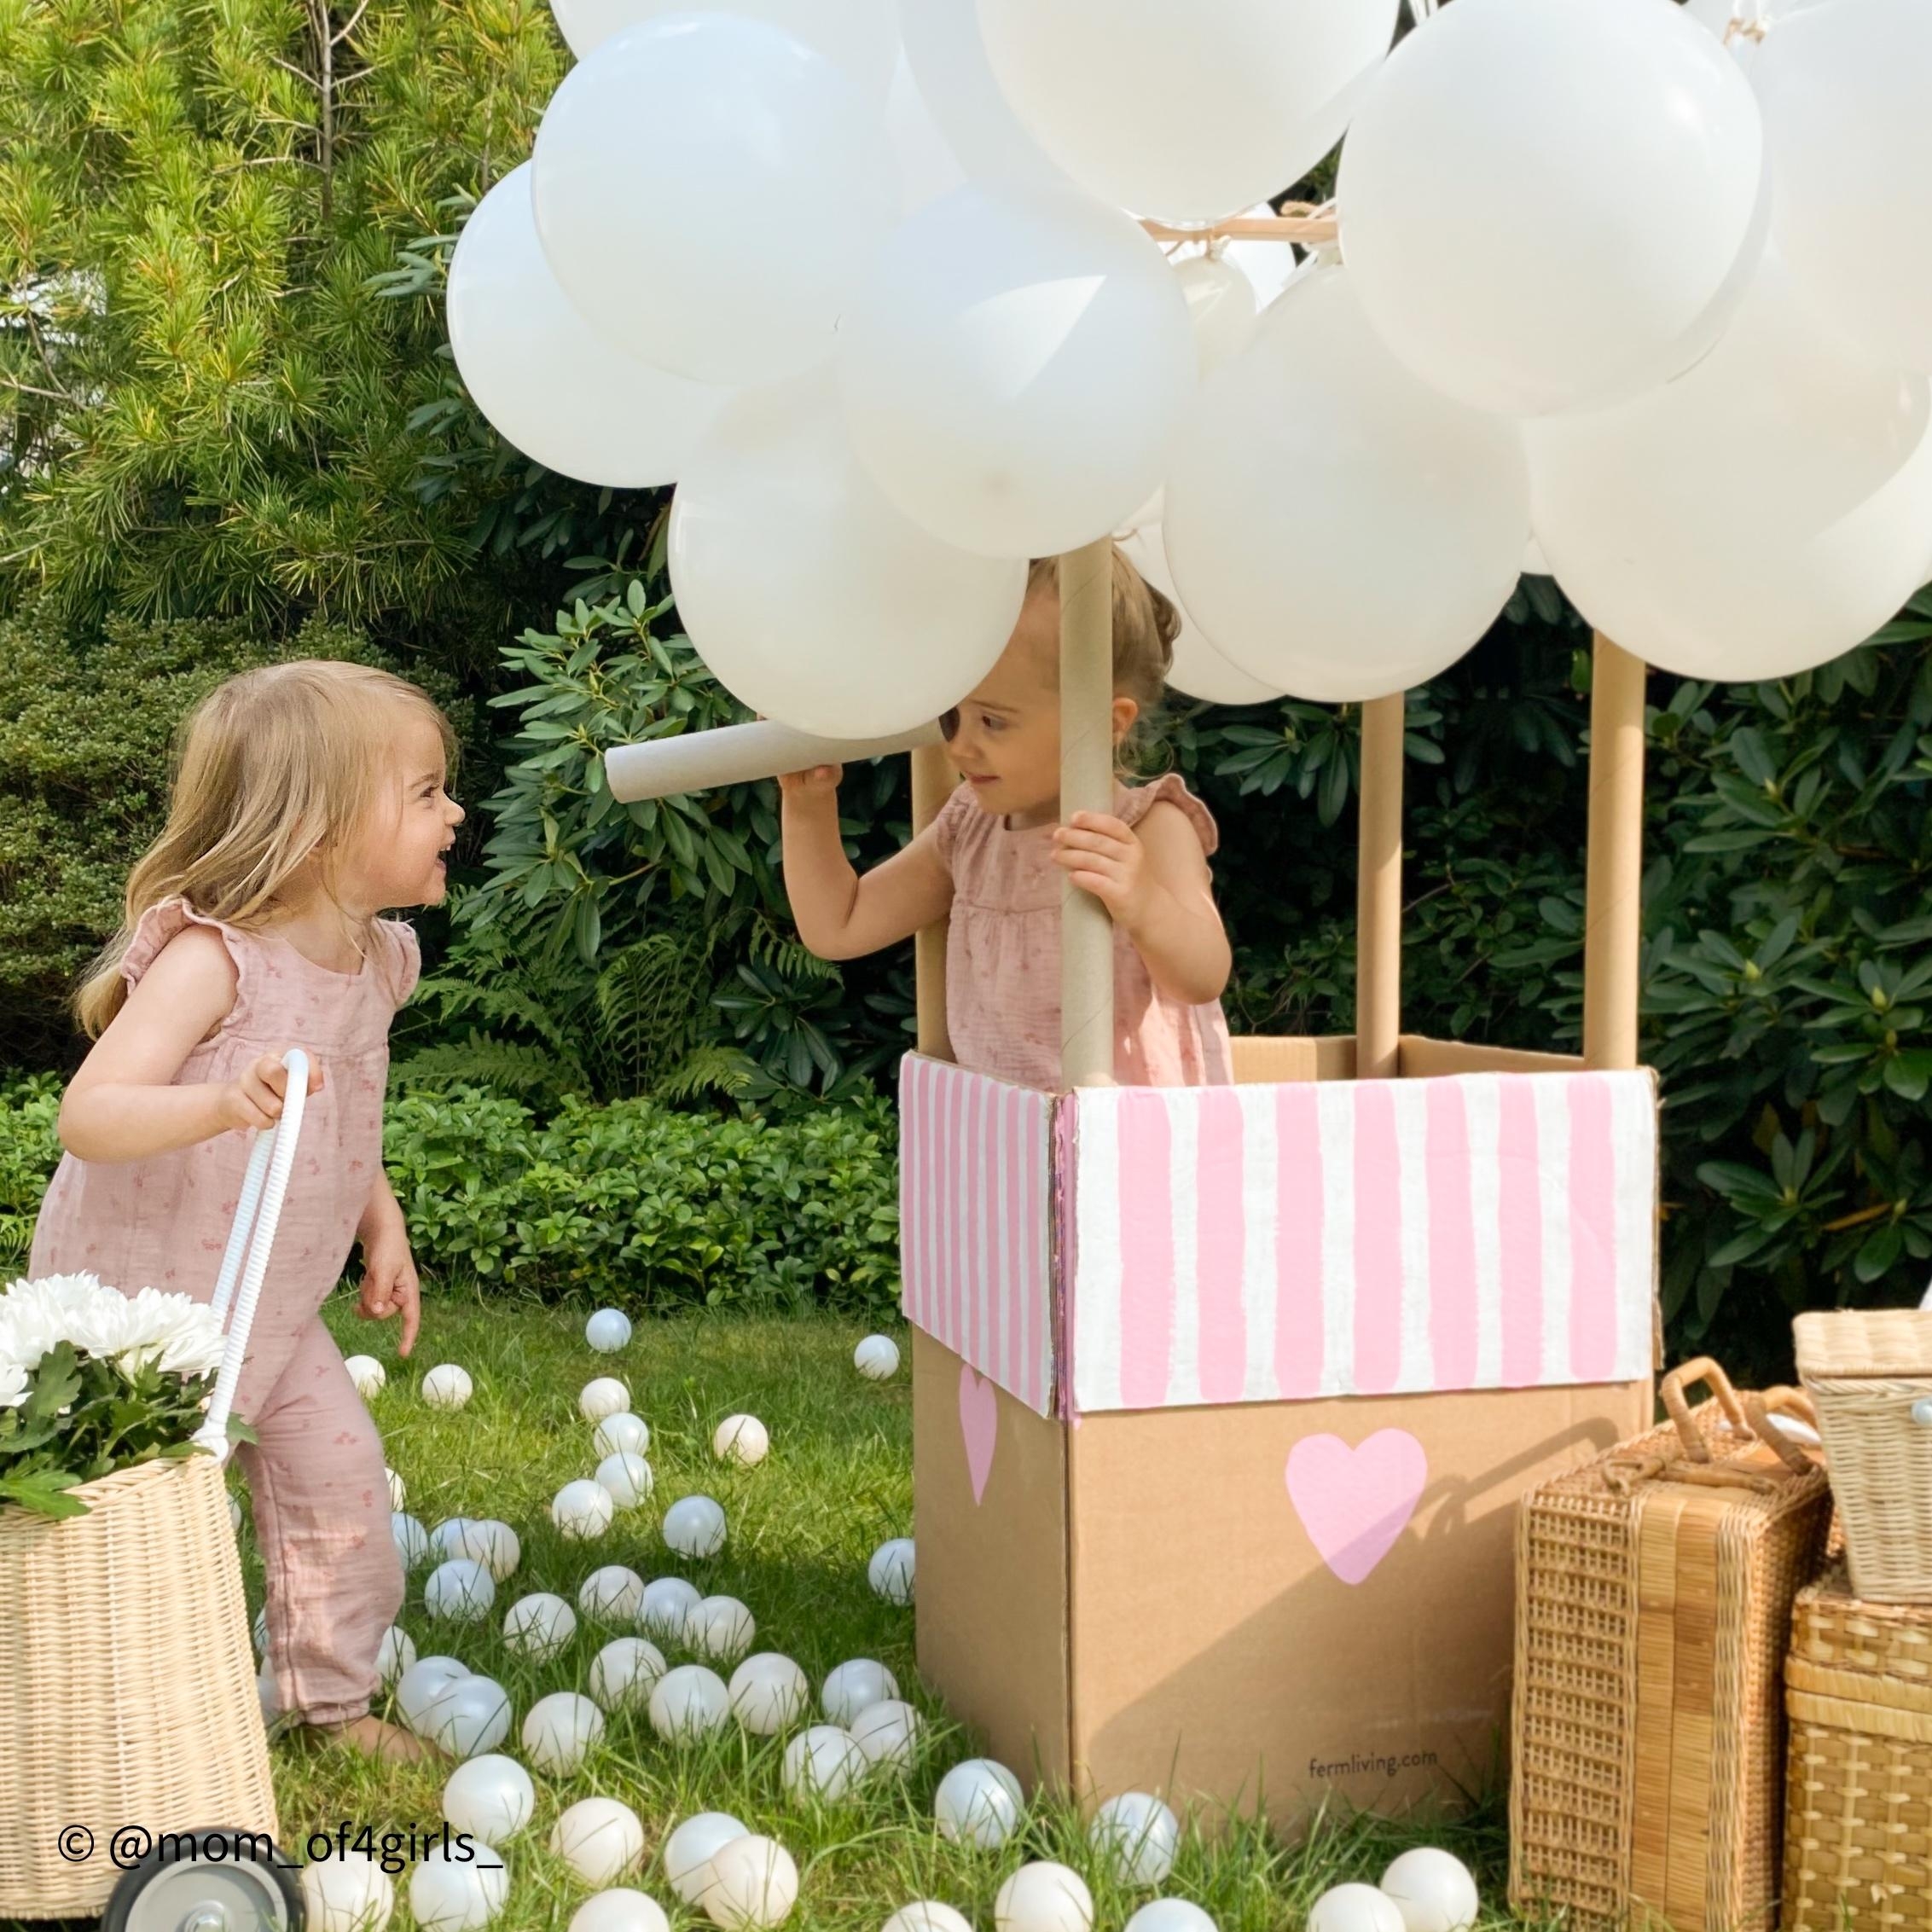 #kidskartonliebe #heissluftballon #recycle #reusereducerecycle #bastelnmitkindern #geburtstag #bastelidee #basteln